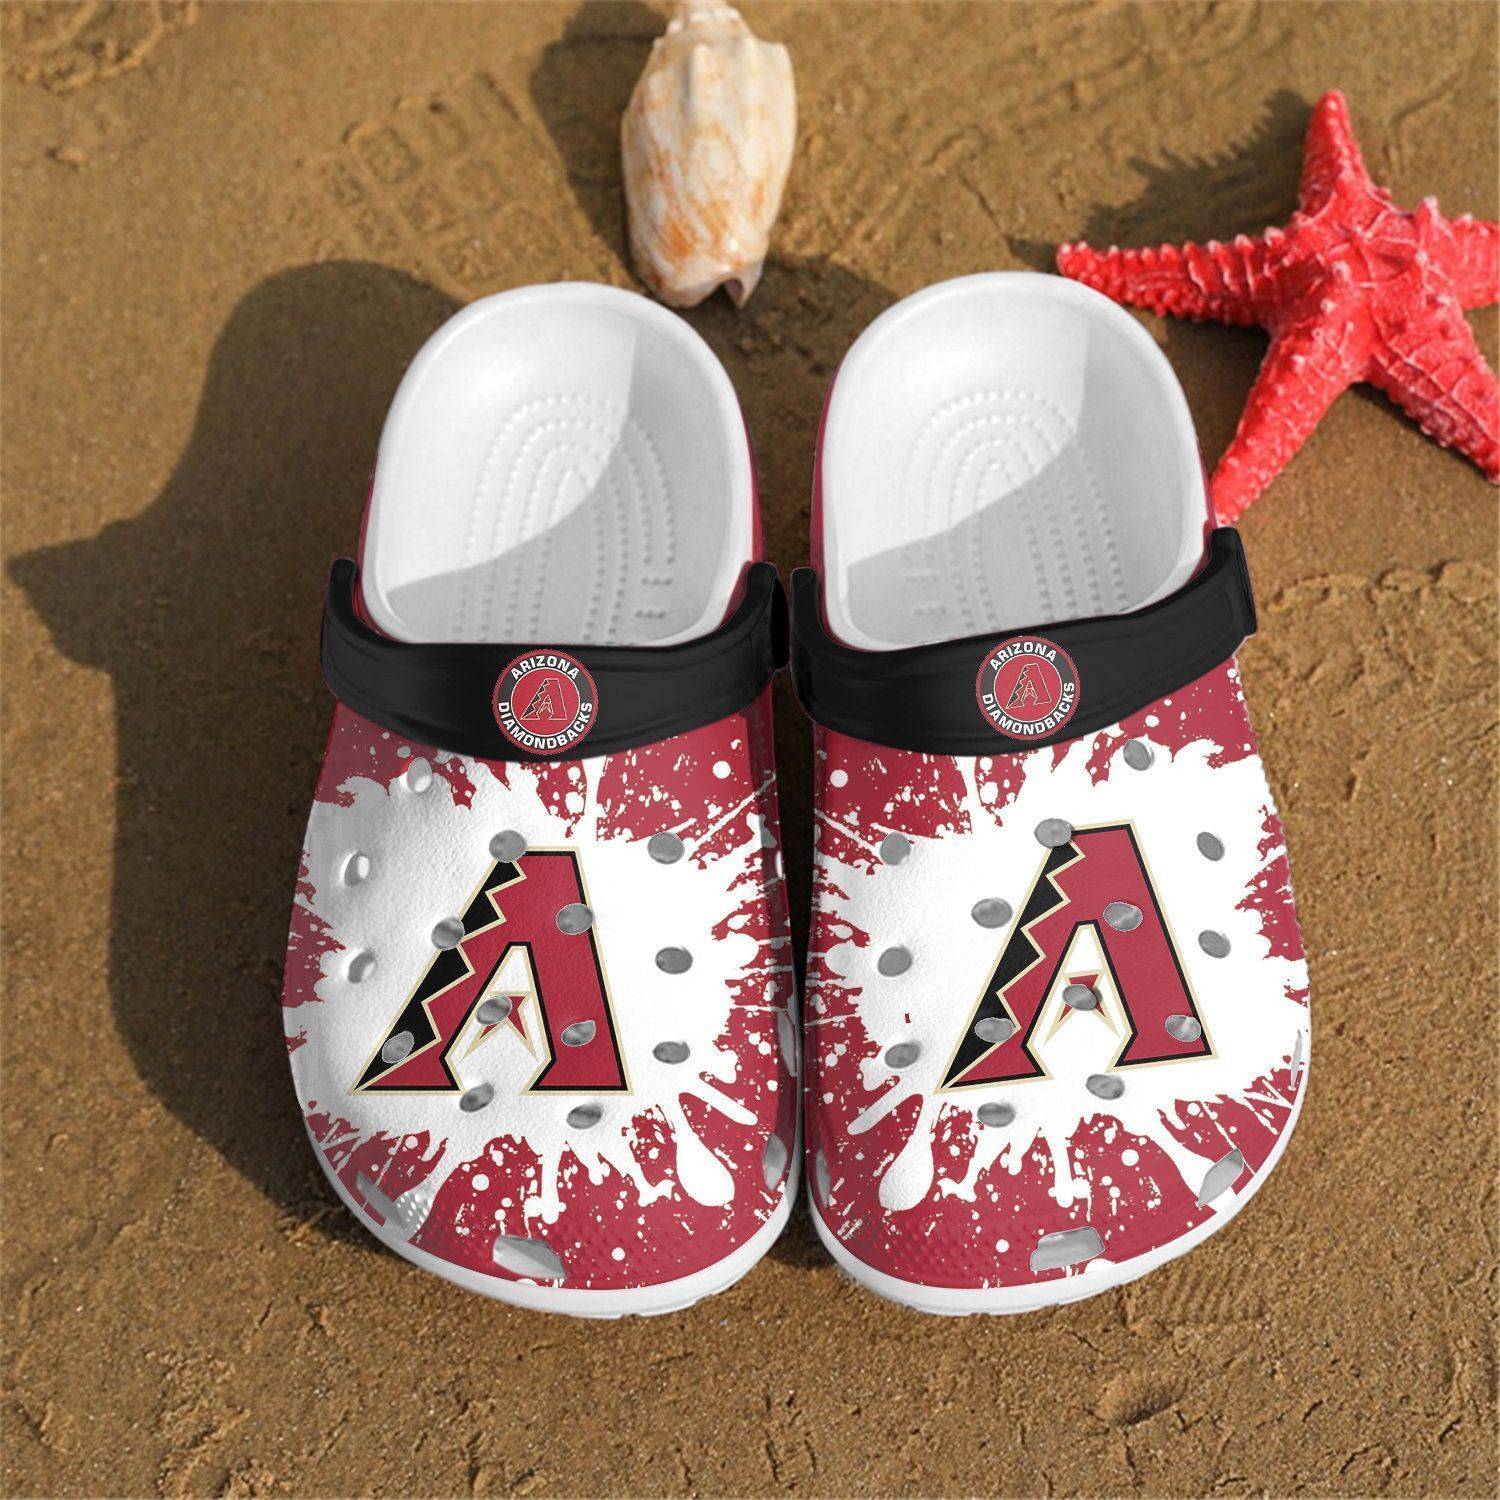 Arizona Diamondbacks Mlb Gift For Fan Crocss Clog Shoescrocband Clogs Comfy Foot